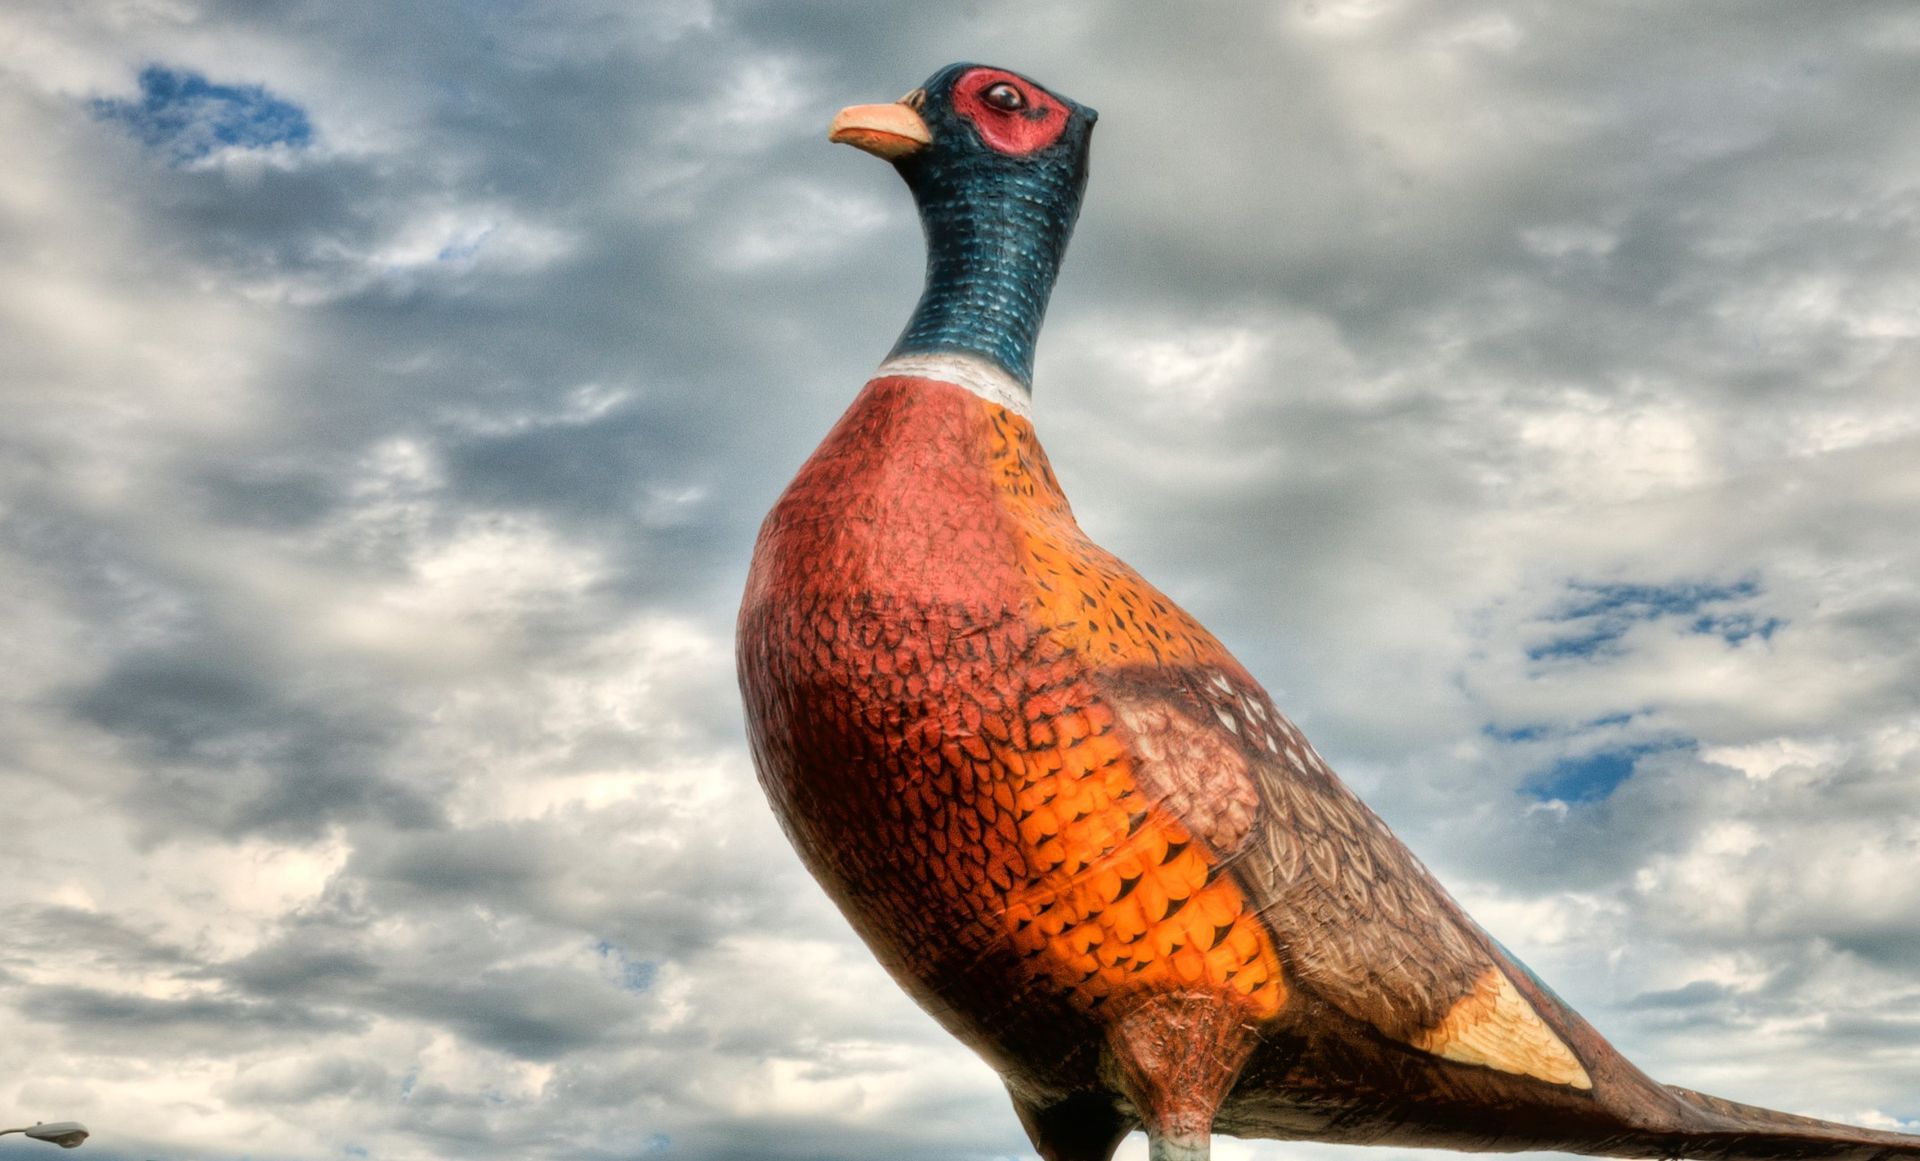 World's Largest Pheasant Sculpture, world record in Huron, South Dakota